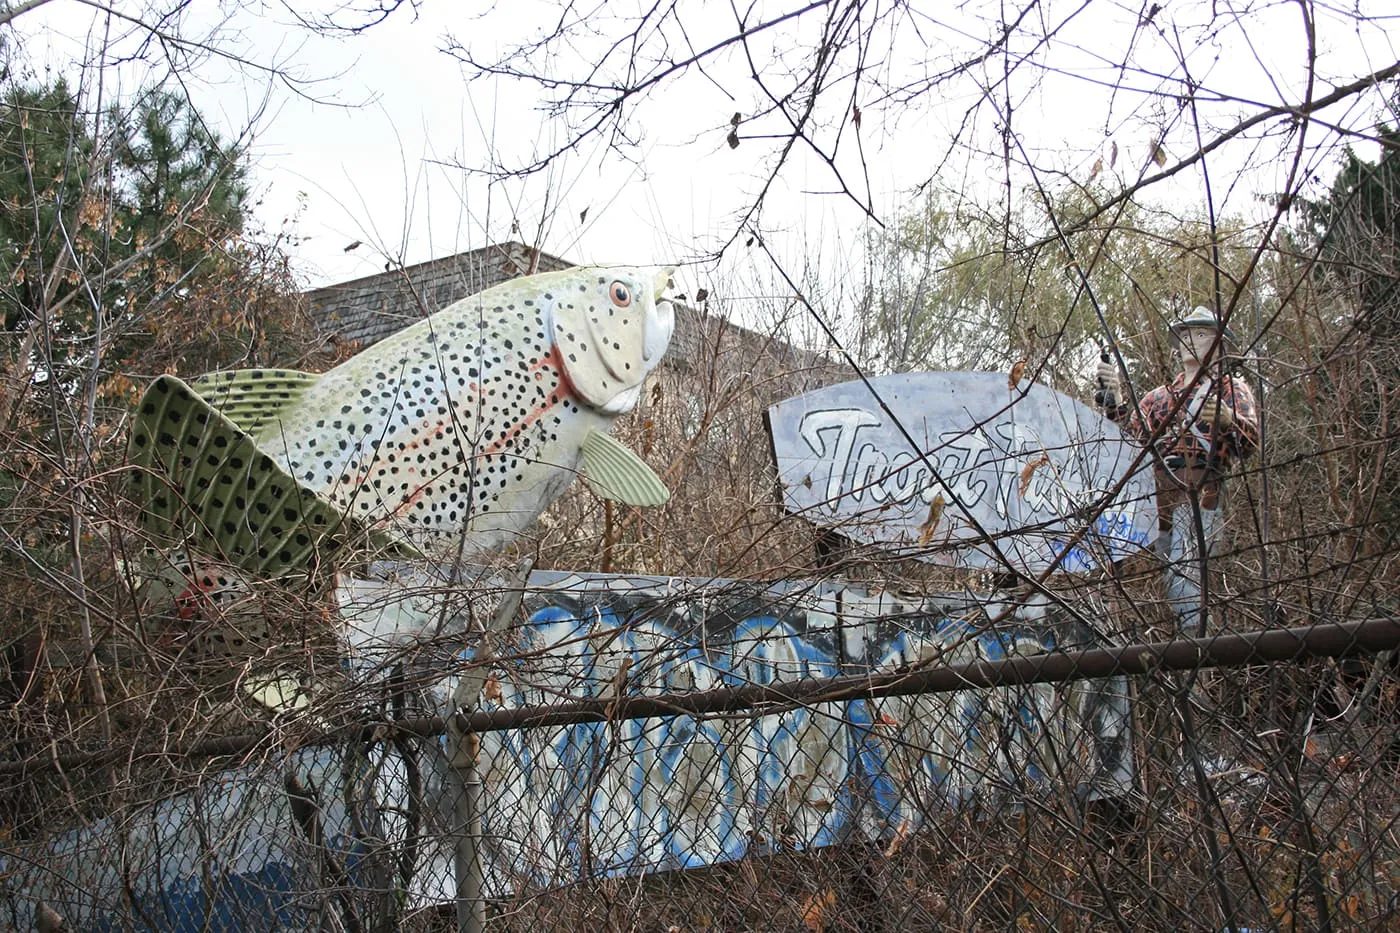 Hidden Trout Fisherman Statue, a roadside attraction in Niles/Des Plaines, Illinois